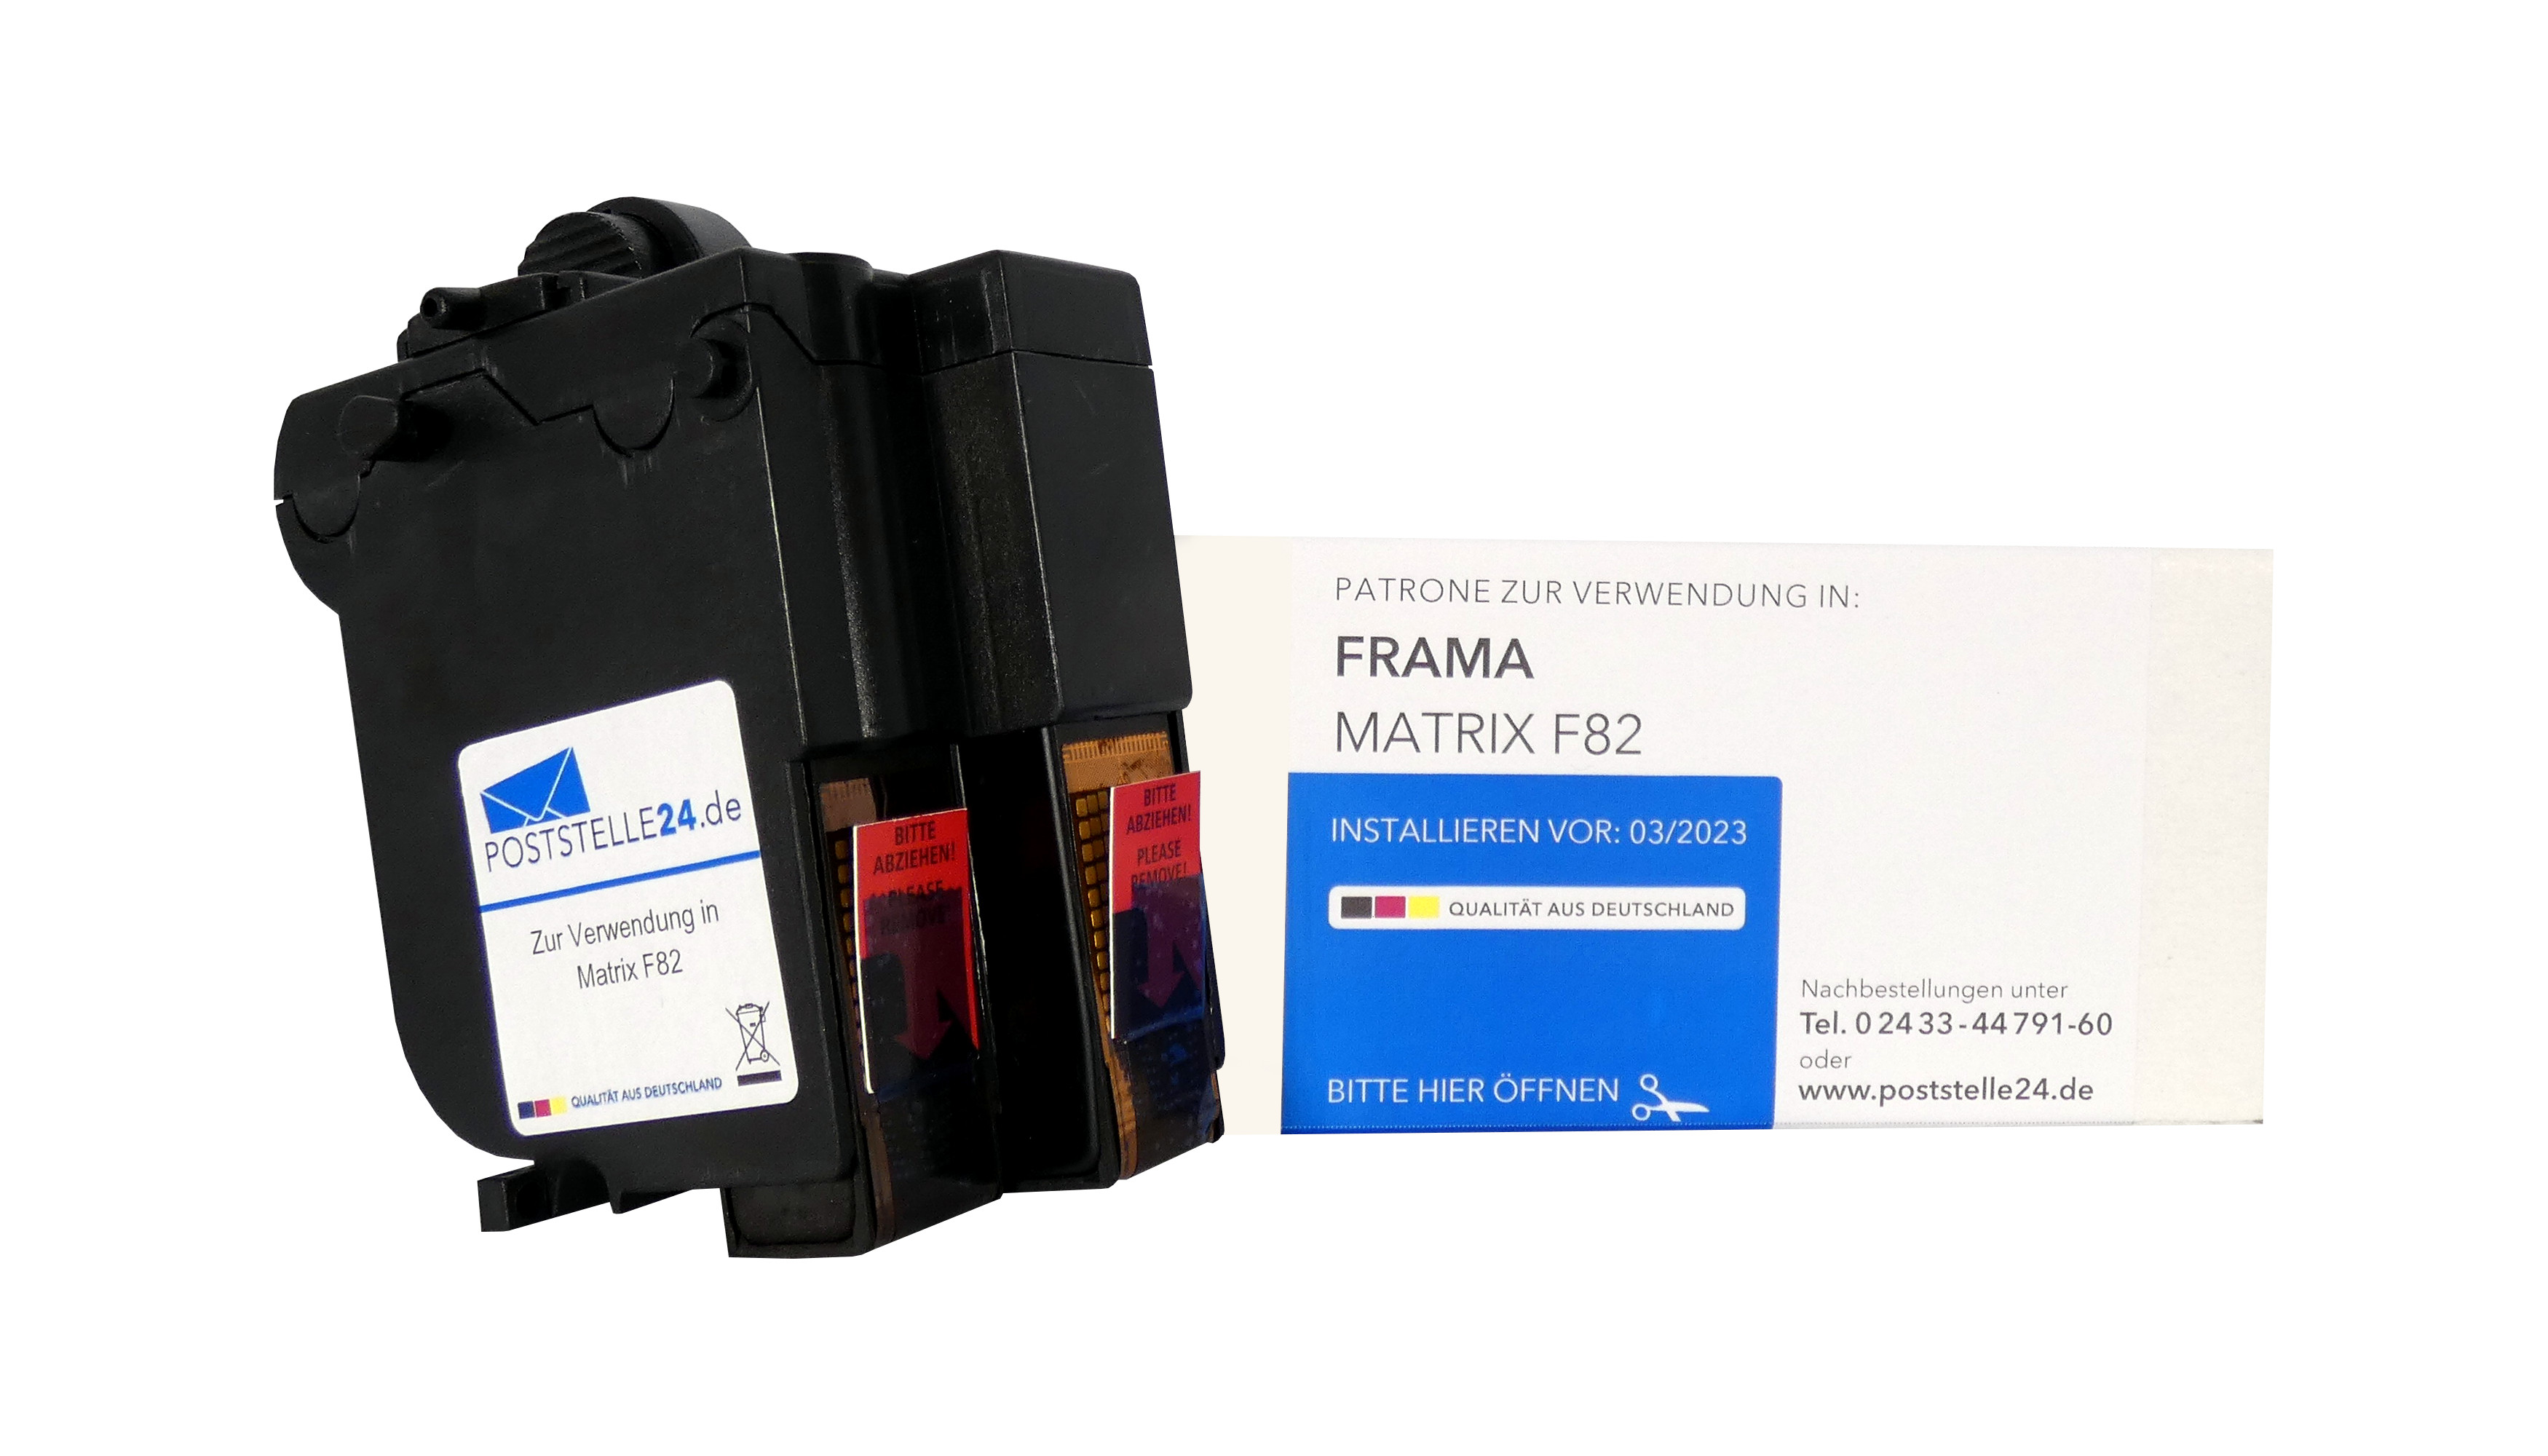 remanufactured cartridge for use in Frama Matrix F82